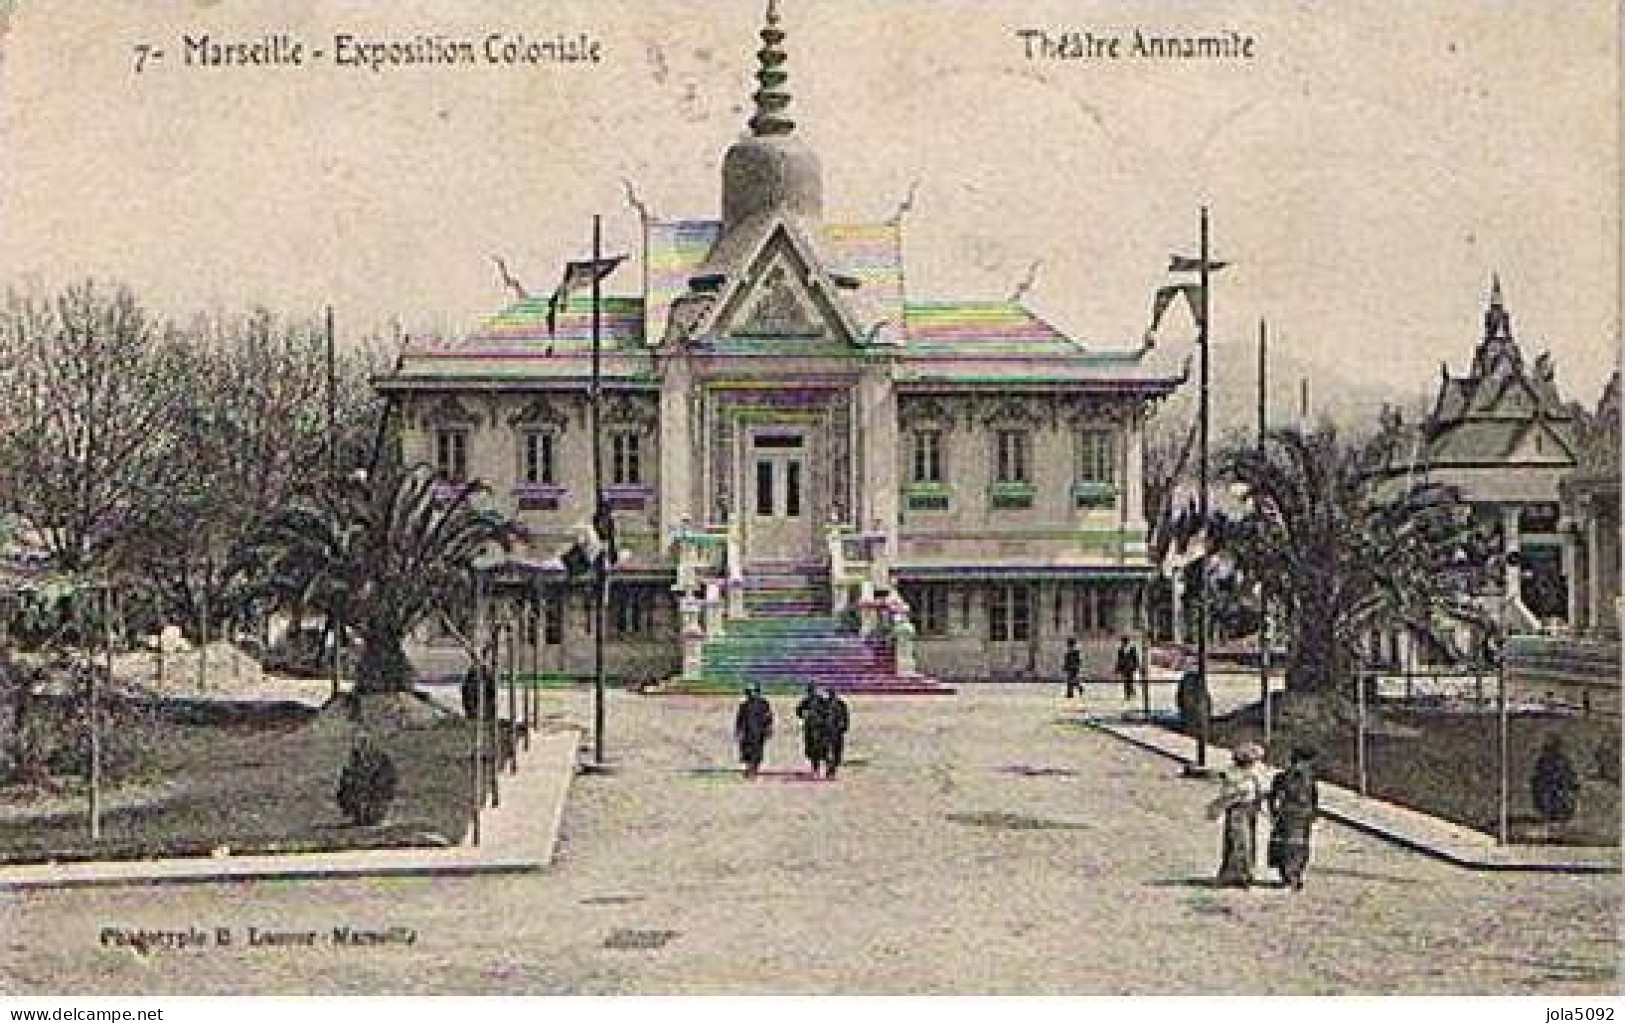 13 - MARSEILLE - Exposition Coloniale - Théâtre Annamite - Mostre Coloniali 1906 – 1922